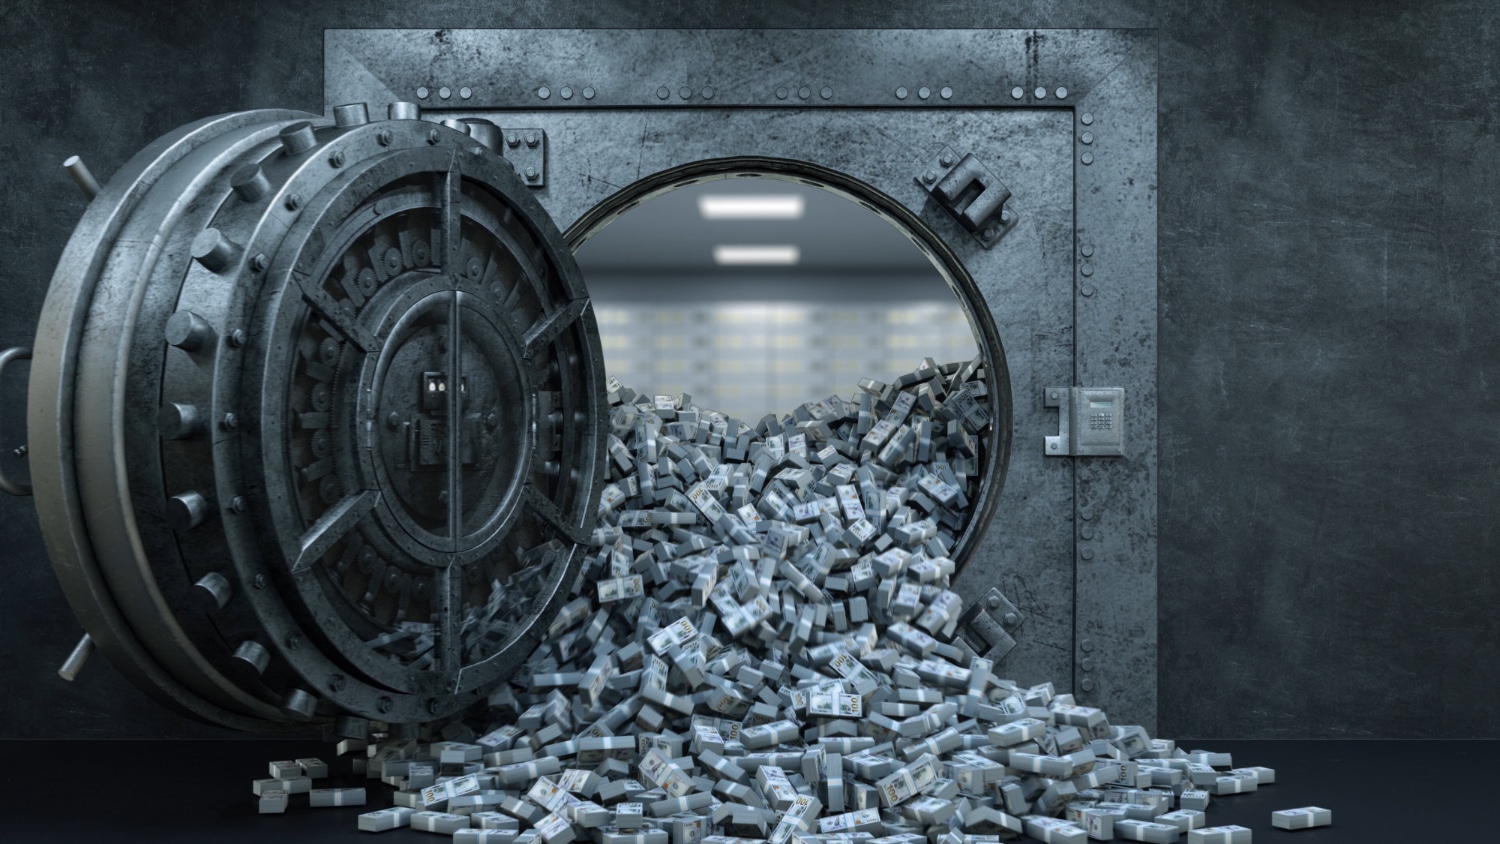 Open Offshore Bank Vault Overflowing With Stacks Of Money